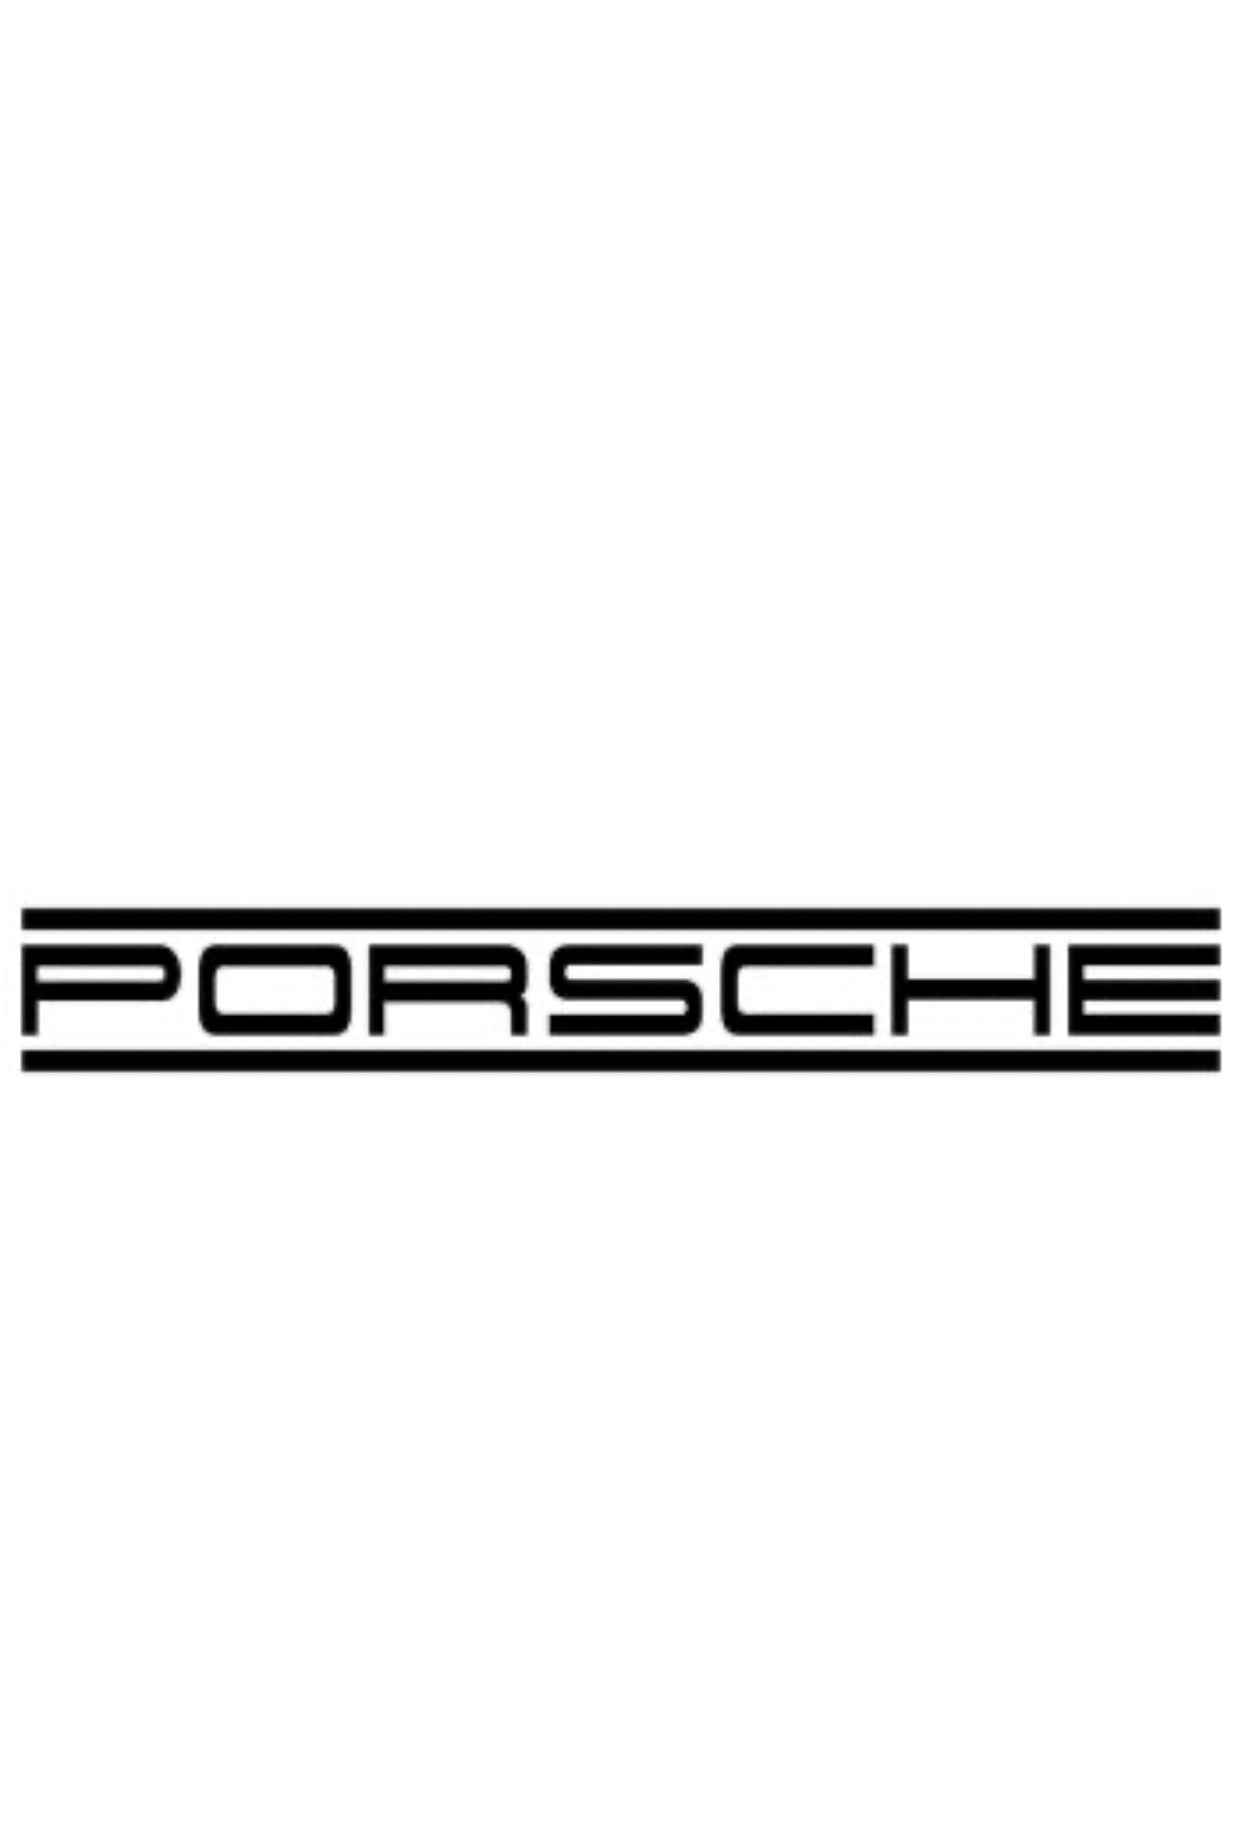 Porsche Panamera 971 Luftfahrwerk tieferlegen